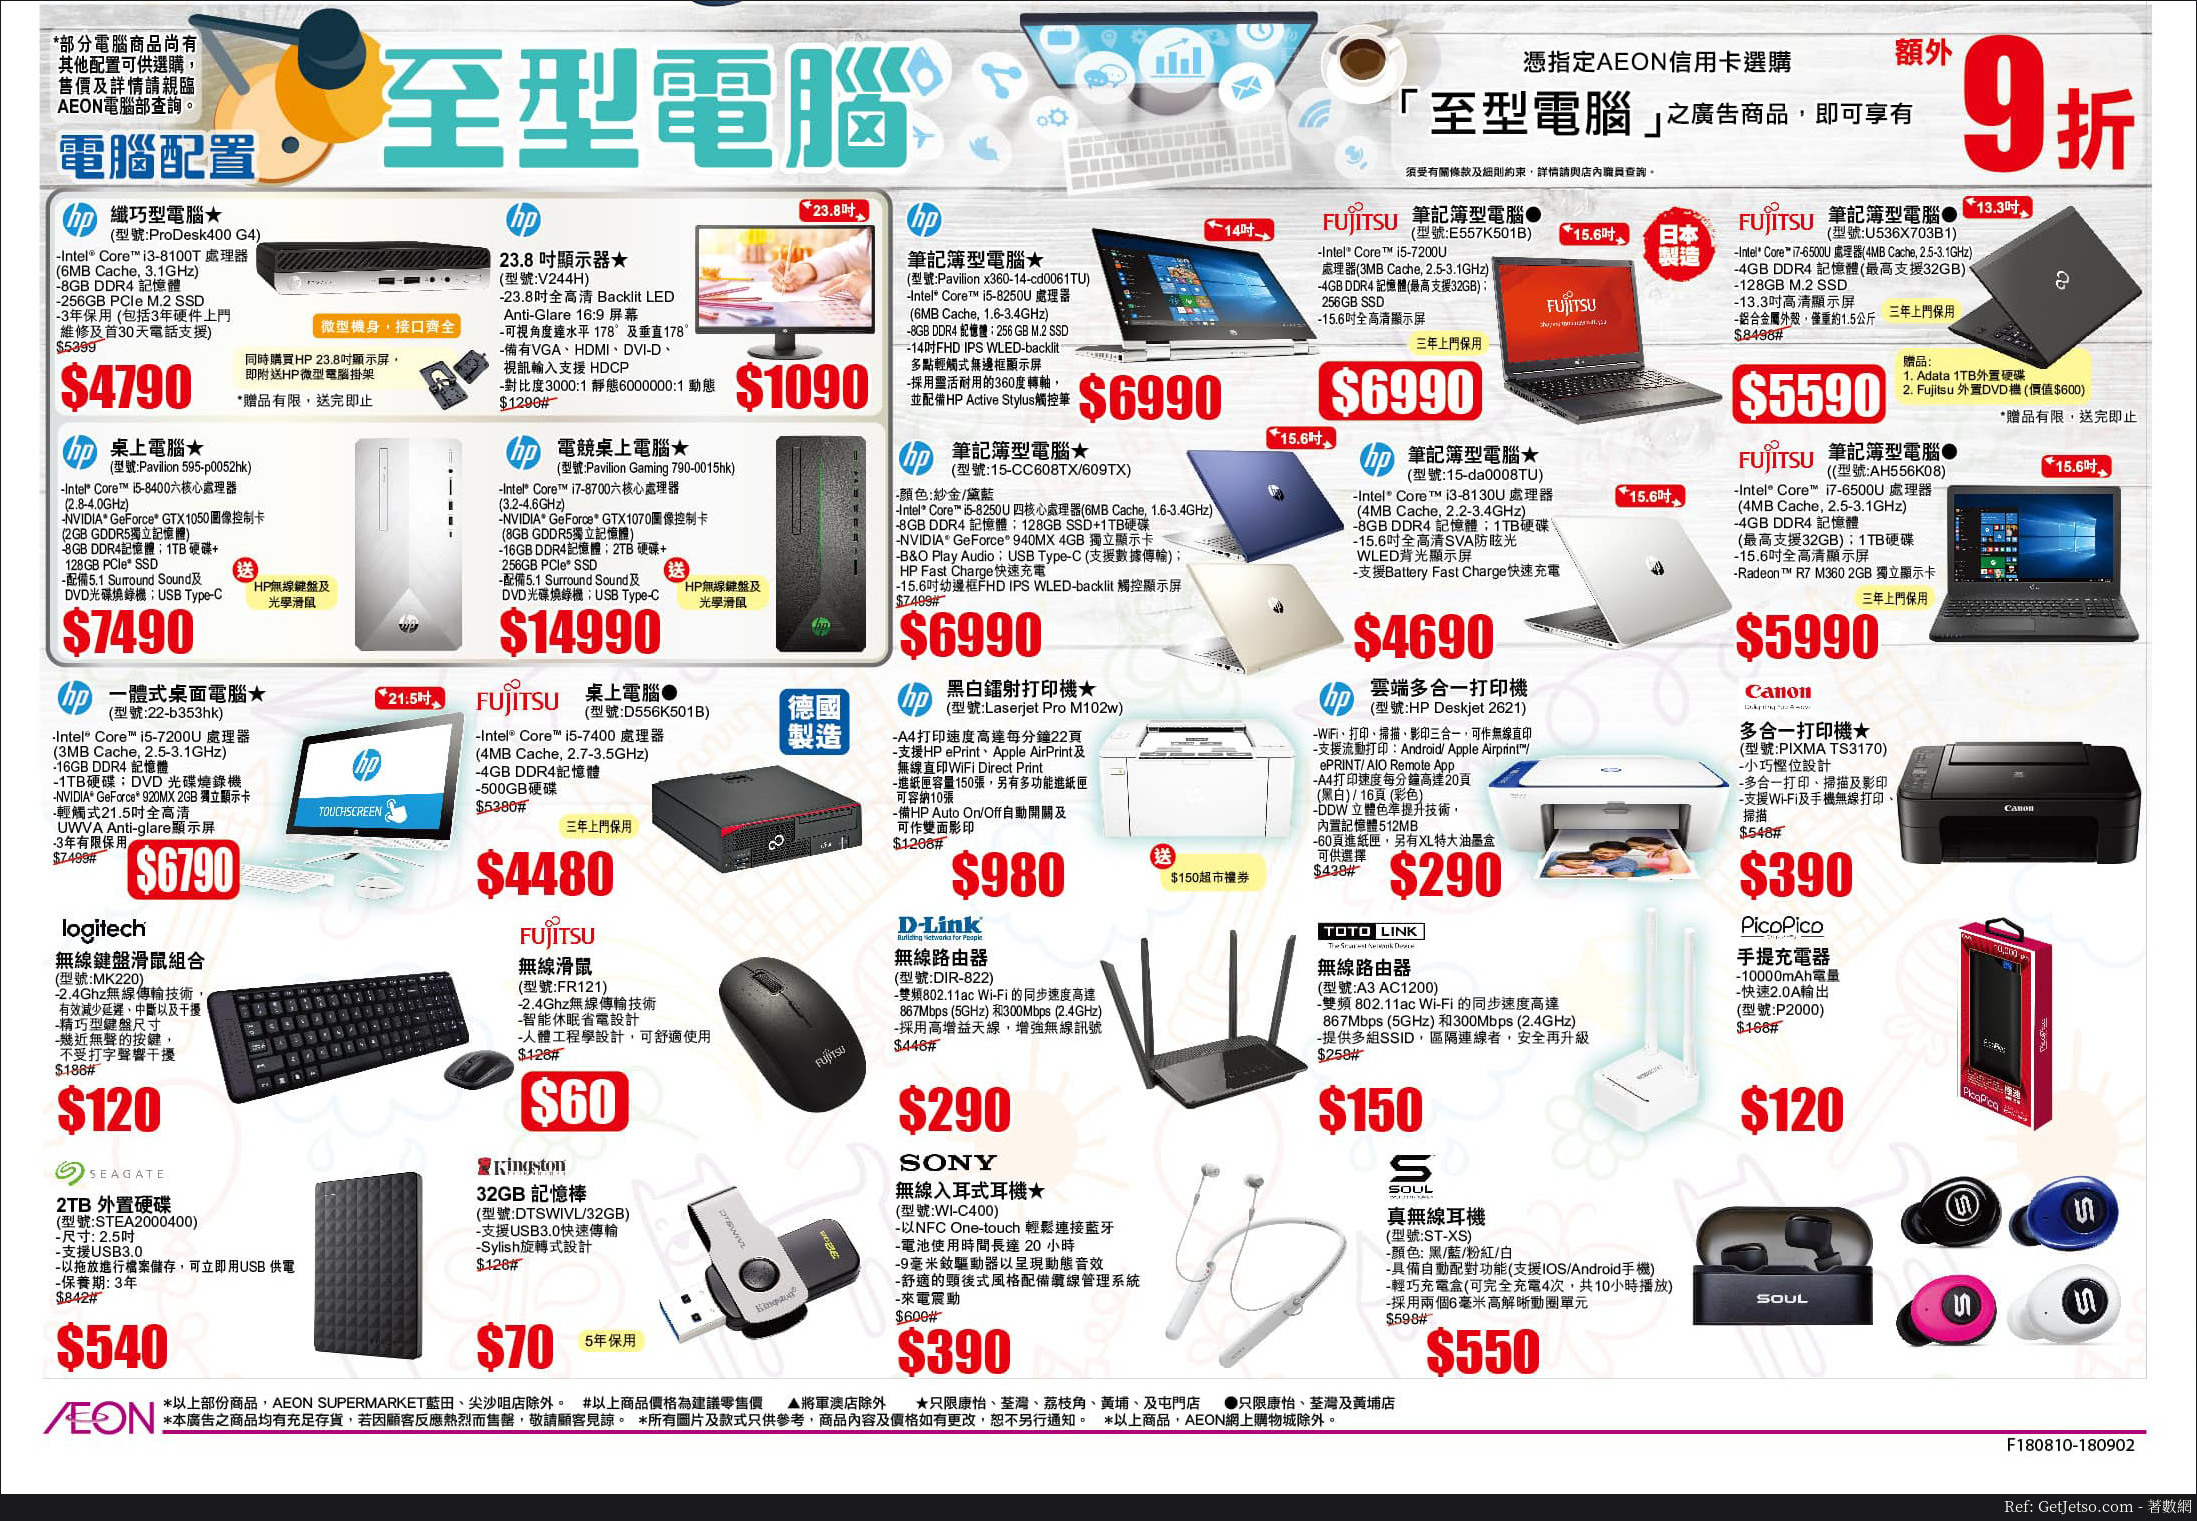 AEON 至型電腦用品展銷優惠(18年8月10-9月2日)圖片1